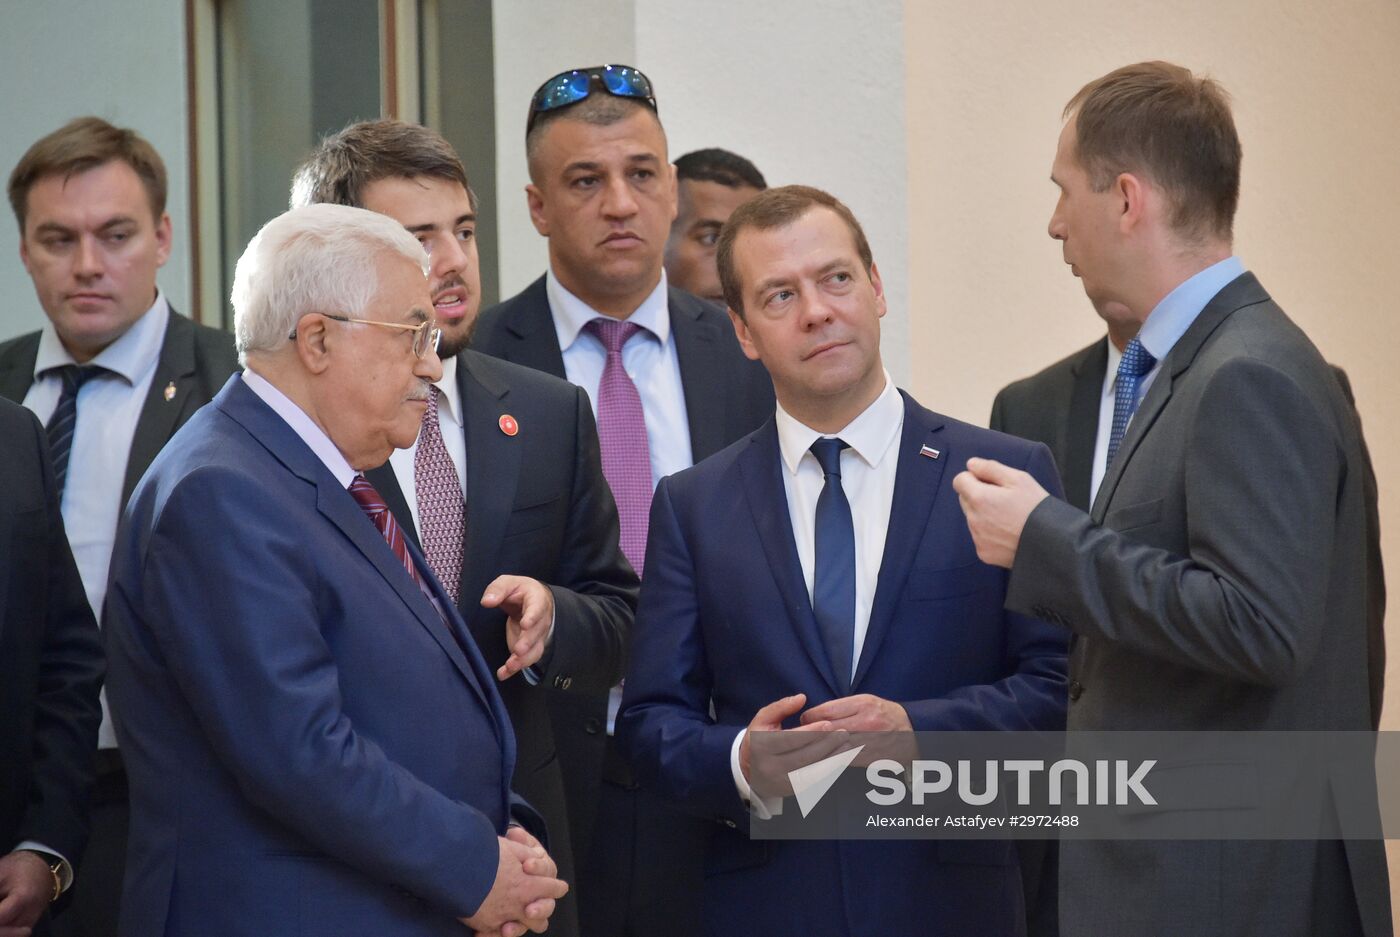 Prime Minister Dmitry Medvedev's official visit to Israel